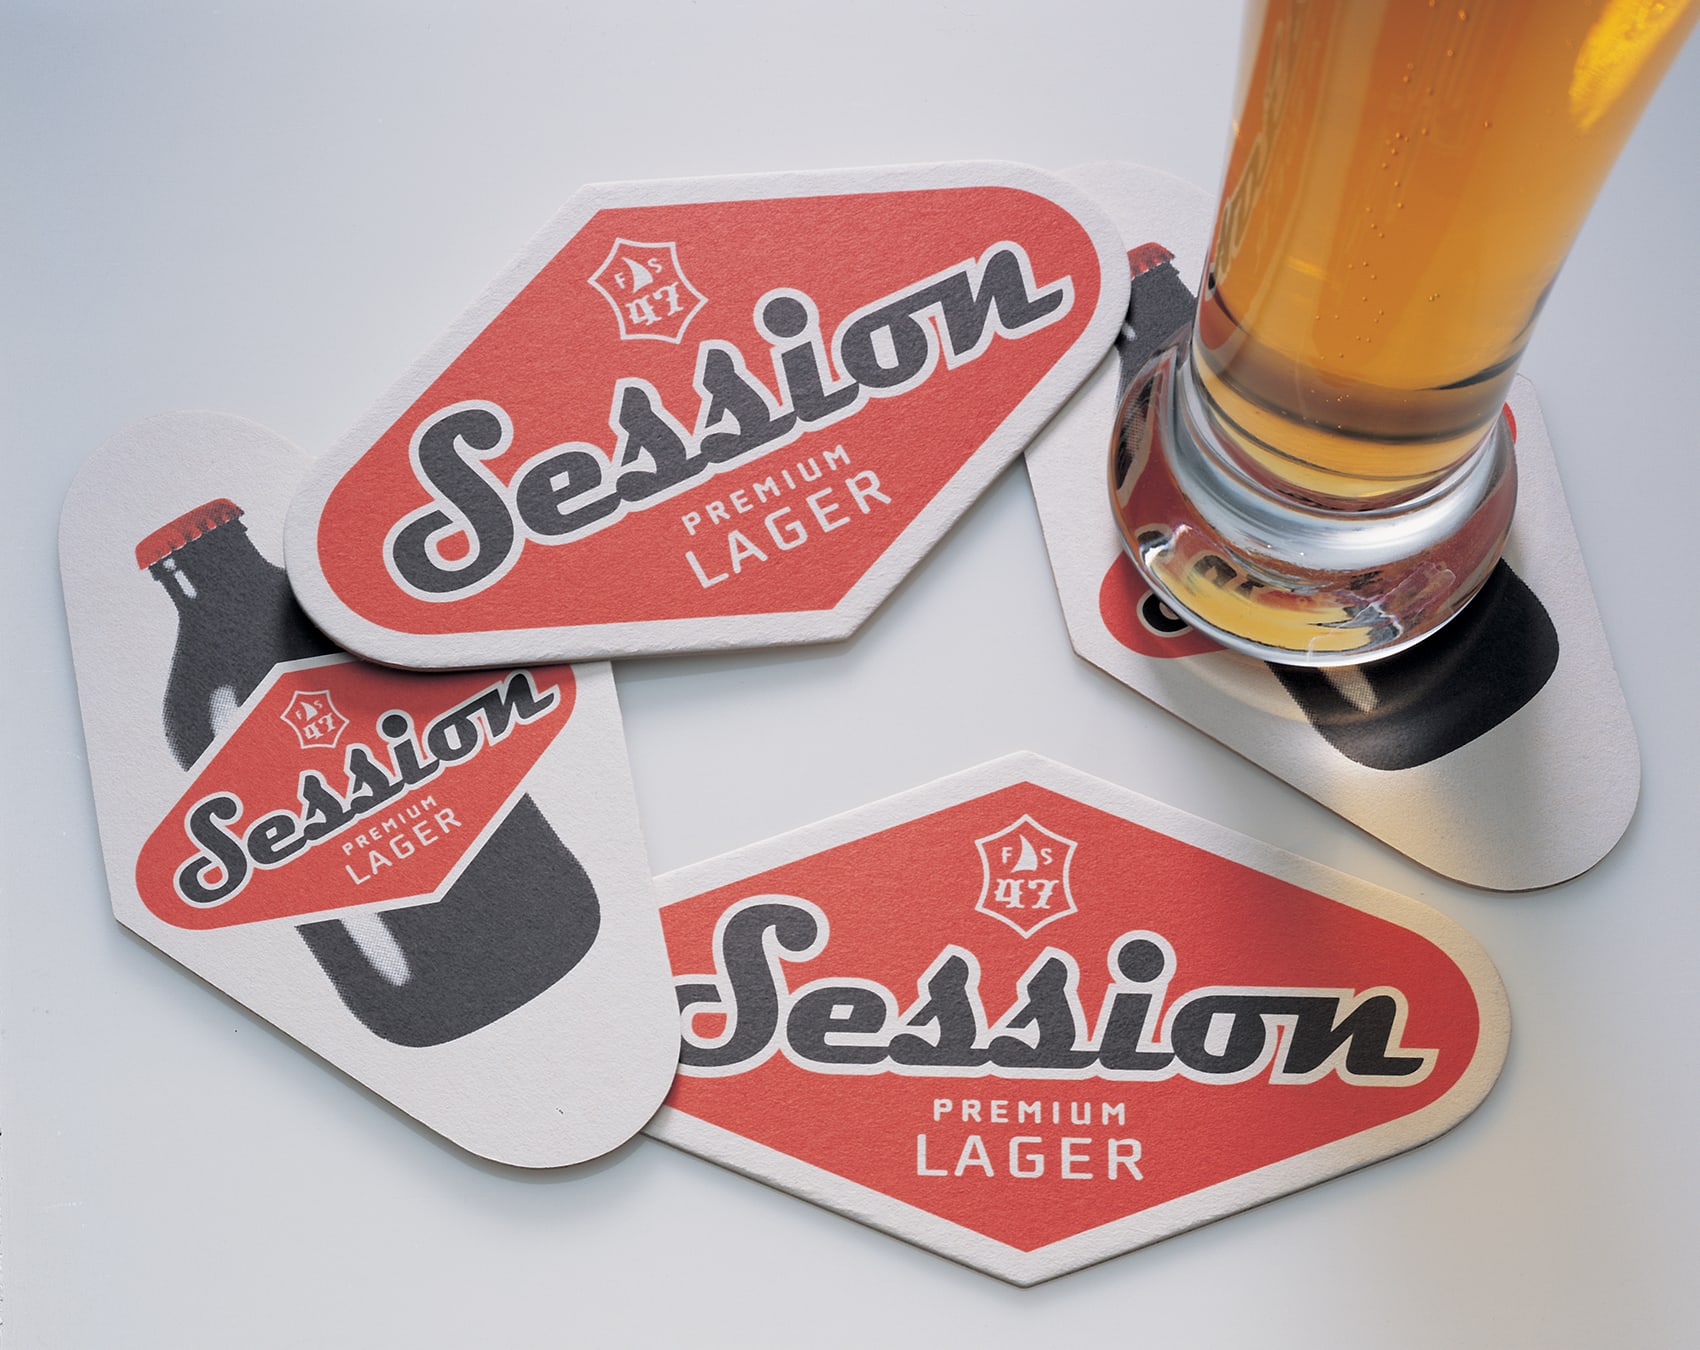 Session beer promotion design coasters